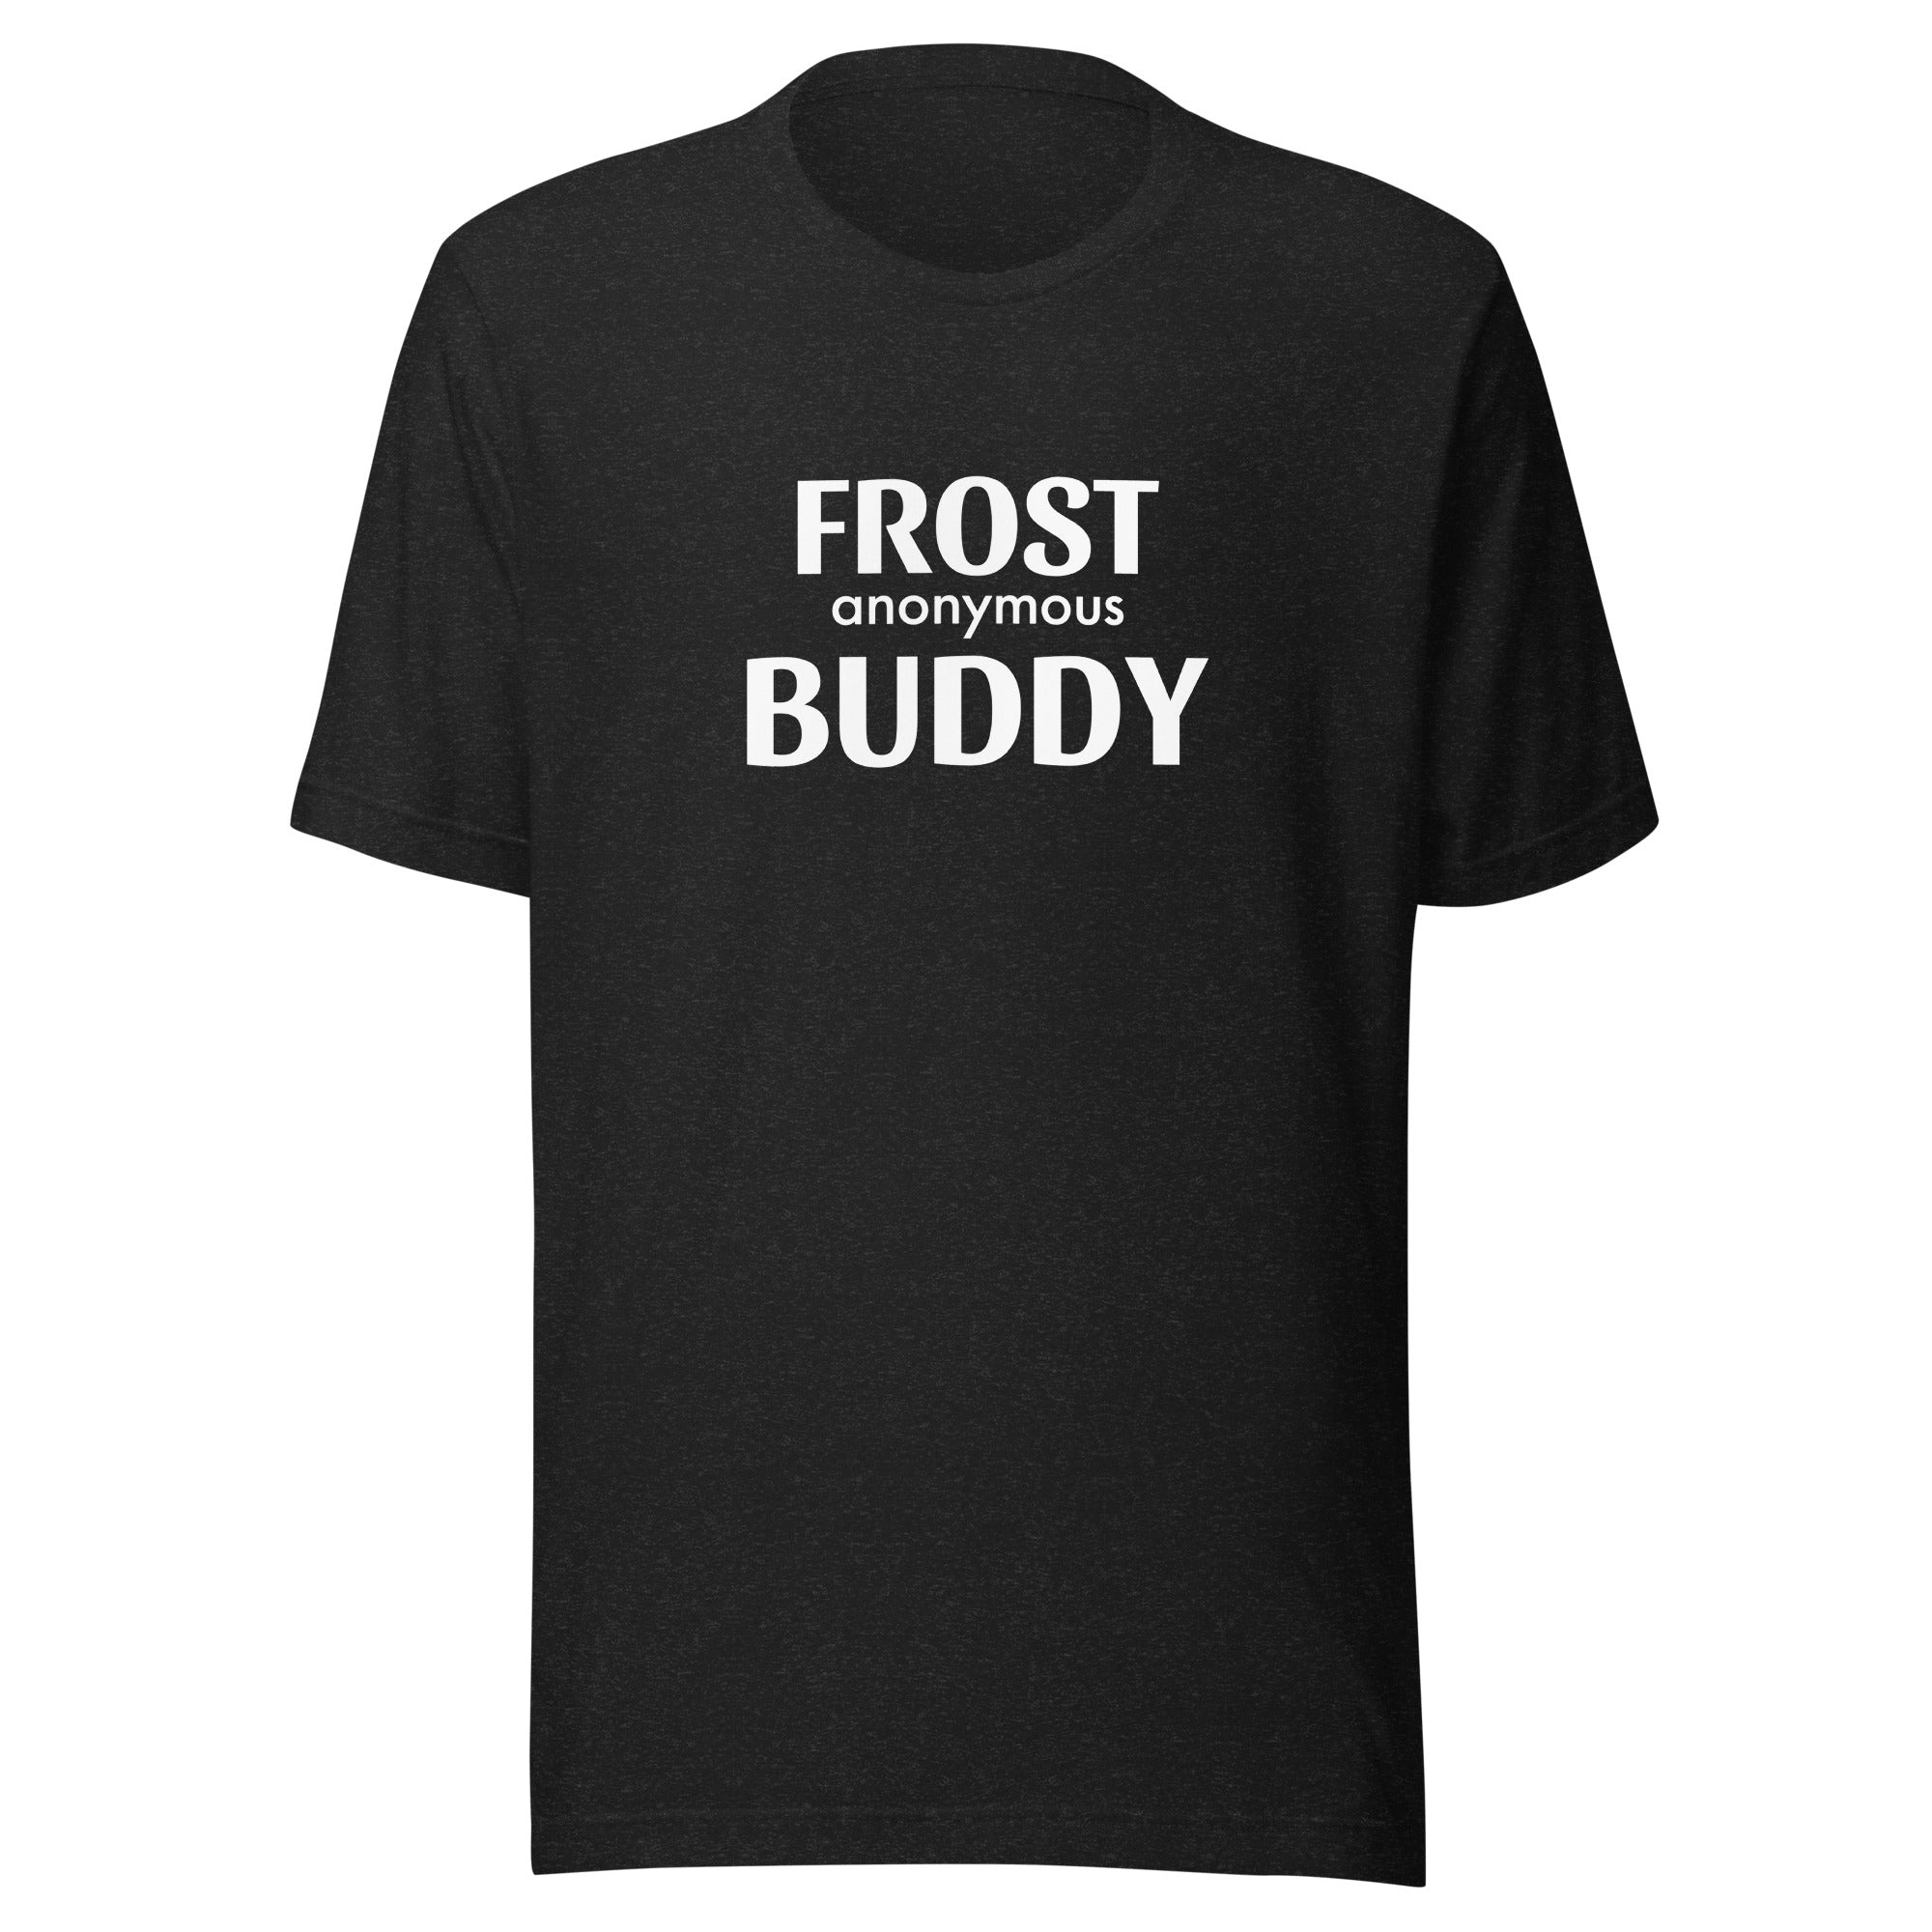 Frost Buddy  Black Heather / XS Frost Buddy Anonymous Unisex T-shirt